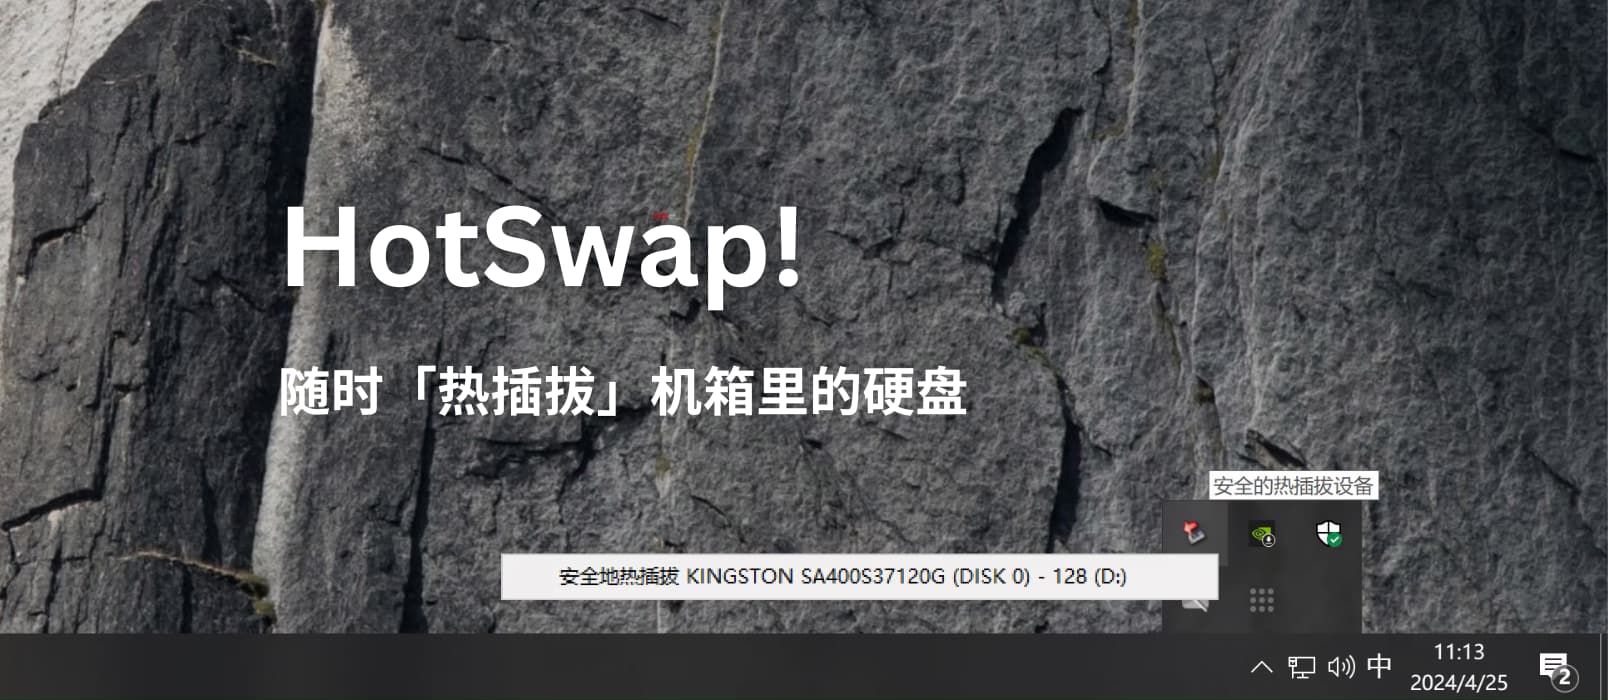 HotSwap! - 给硬盘加个软件开关，随时「拔掉机箱里的硬盘」[Windows] 1